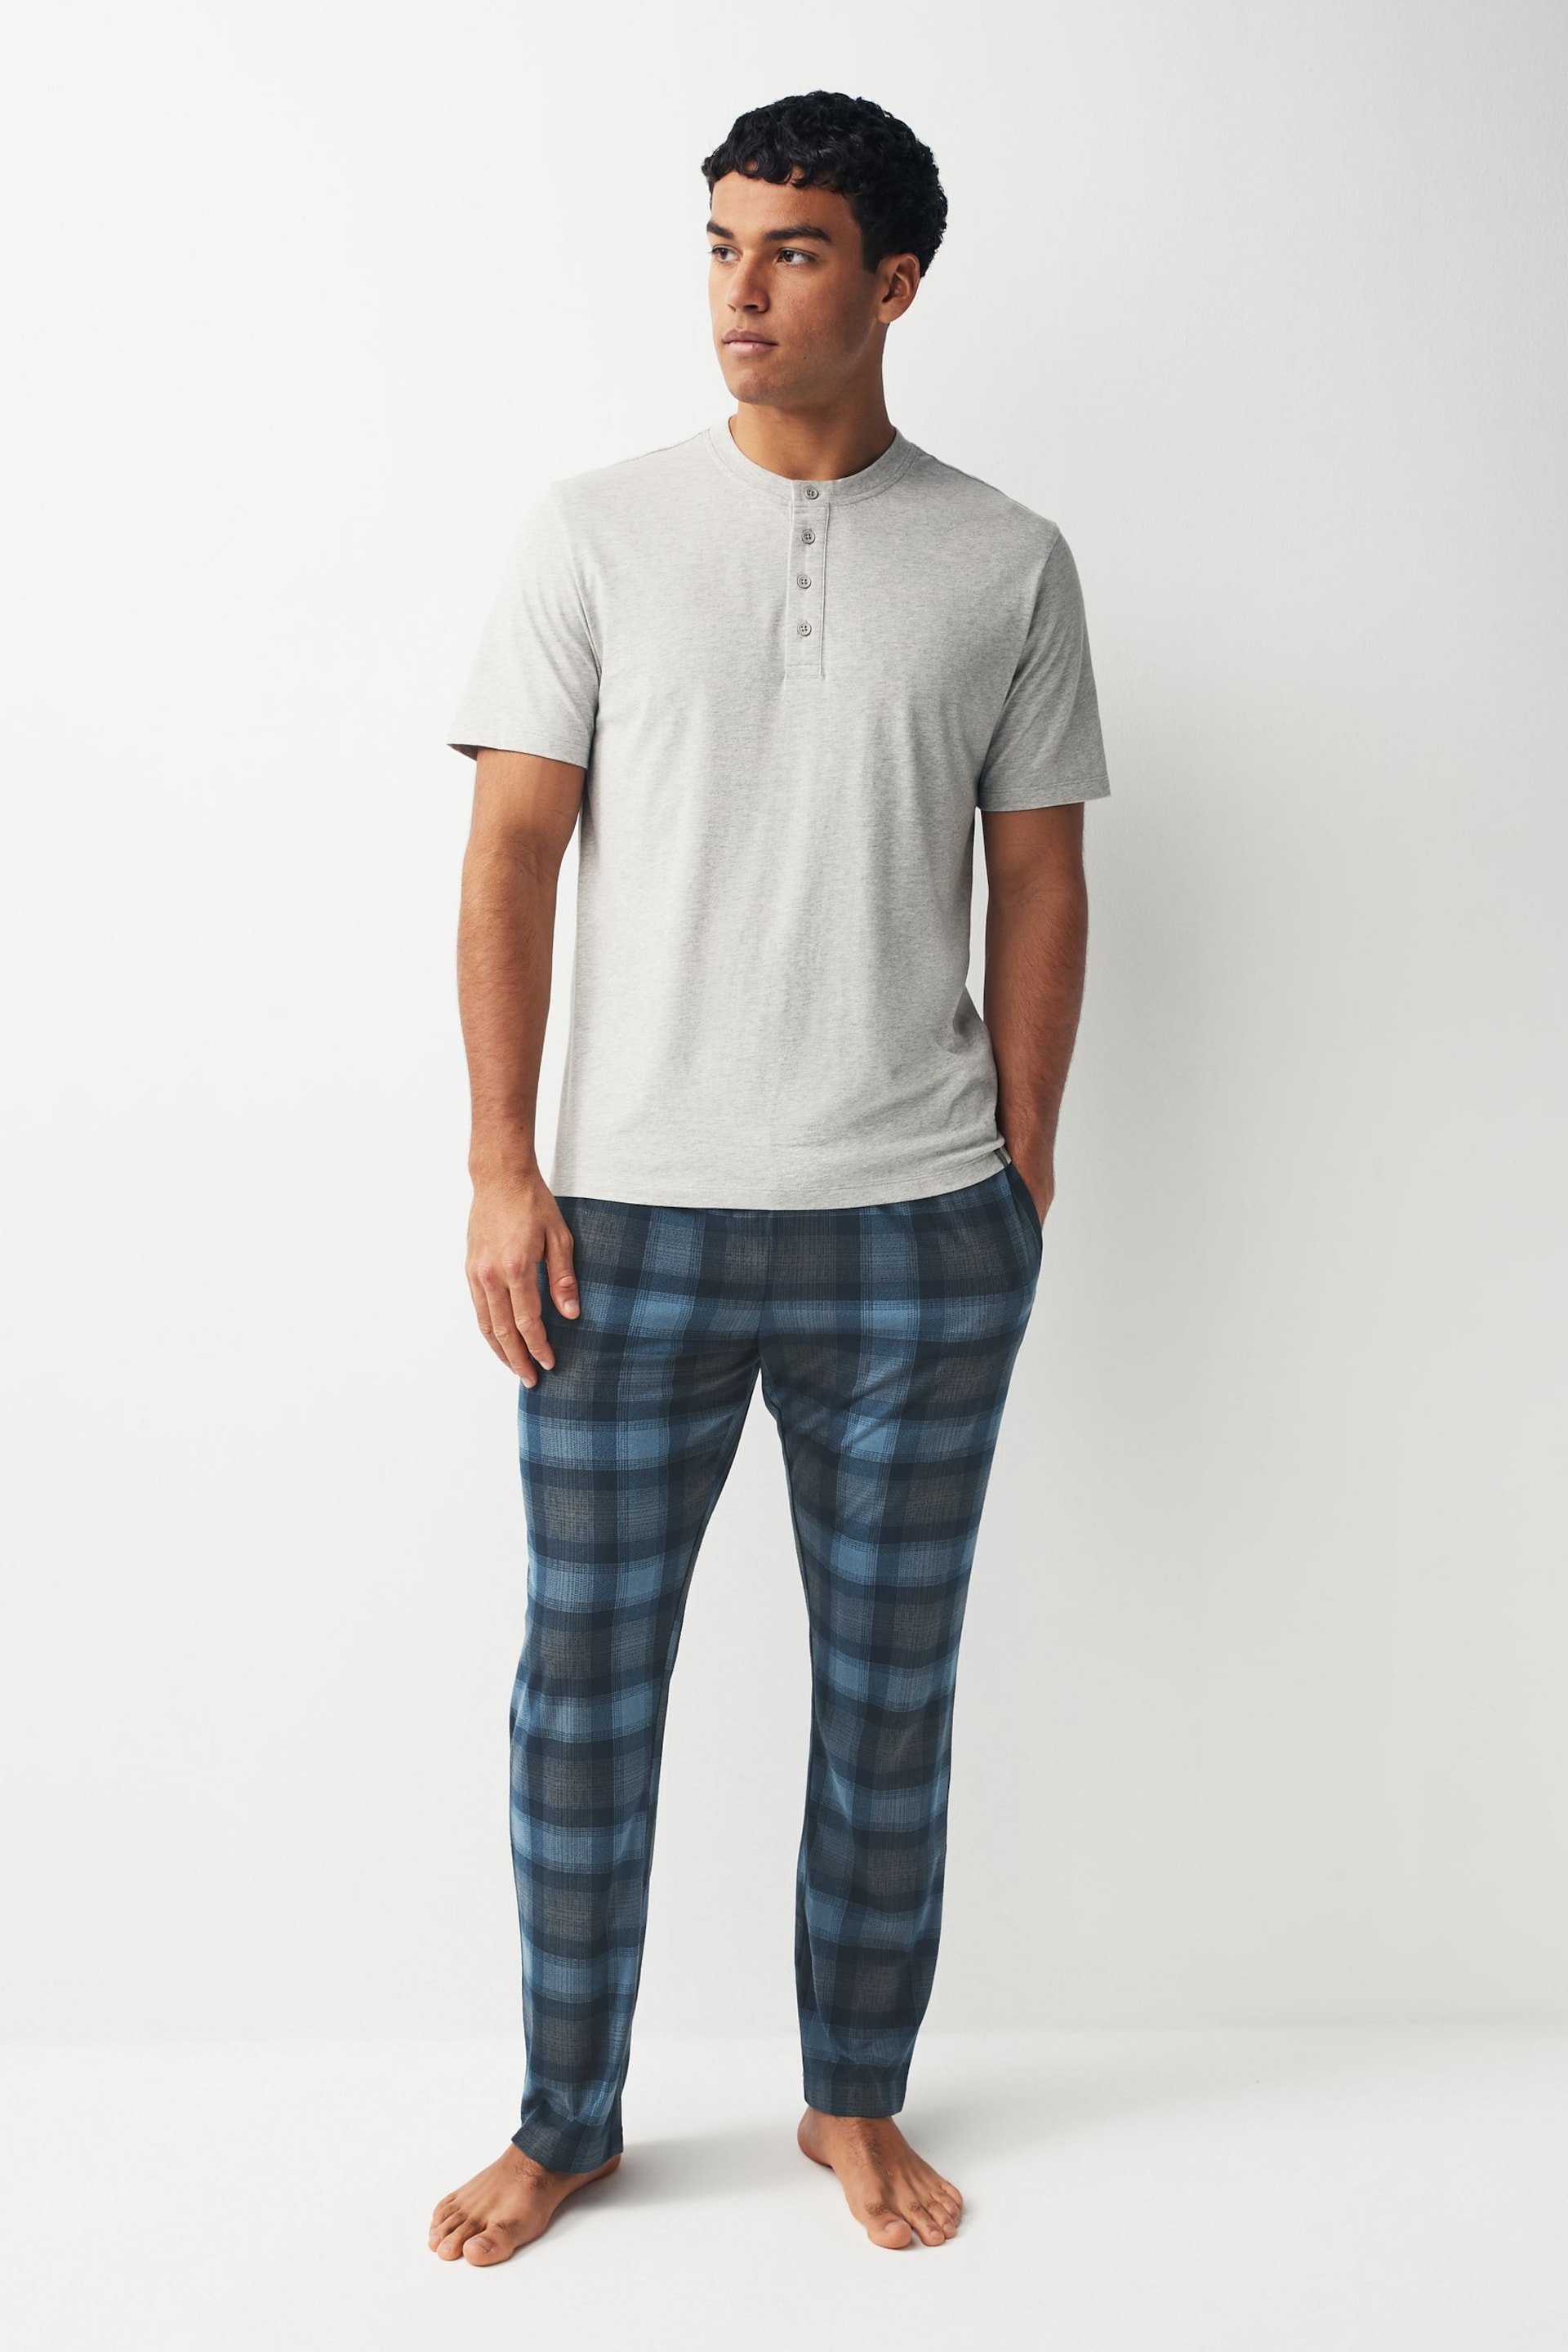 Grey/Blue Check Motionflex Cosy Pyjamas Set - Image 1 of 8